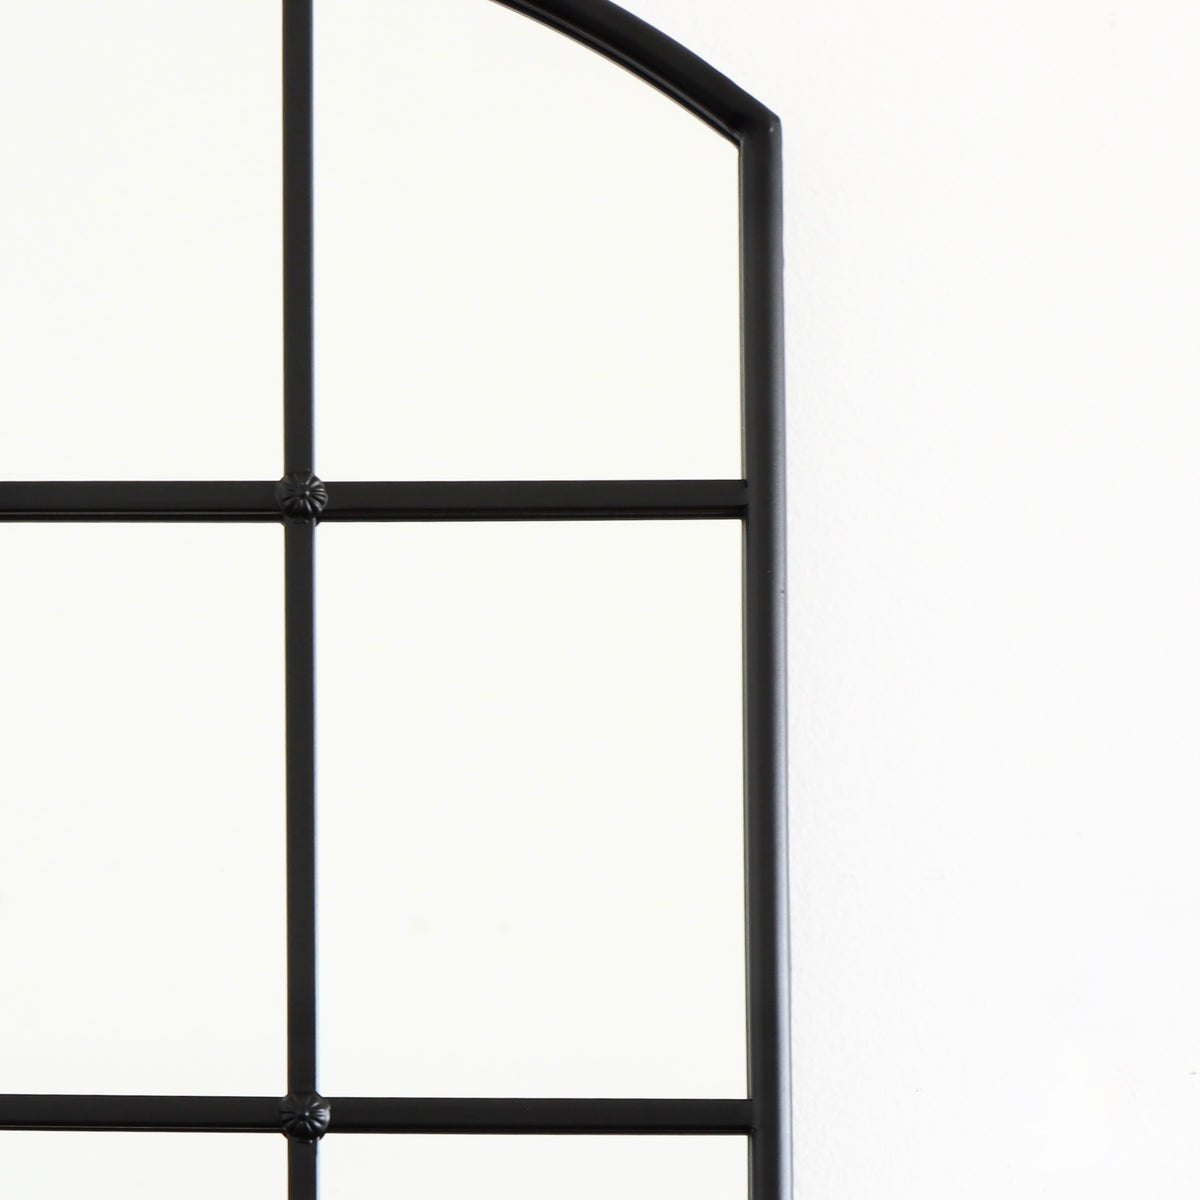 Arched Window Pane Mirror - Black - Holistic Habitat 